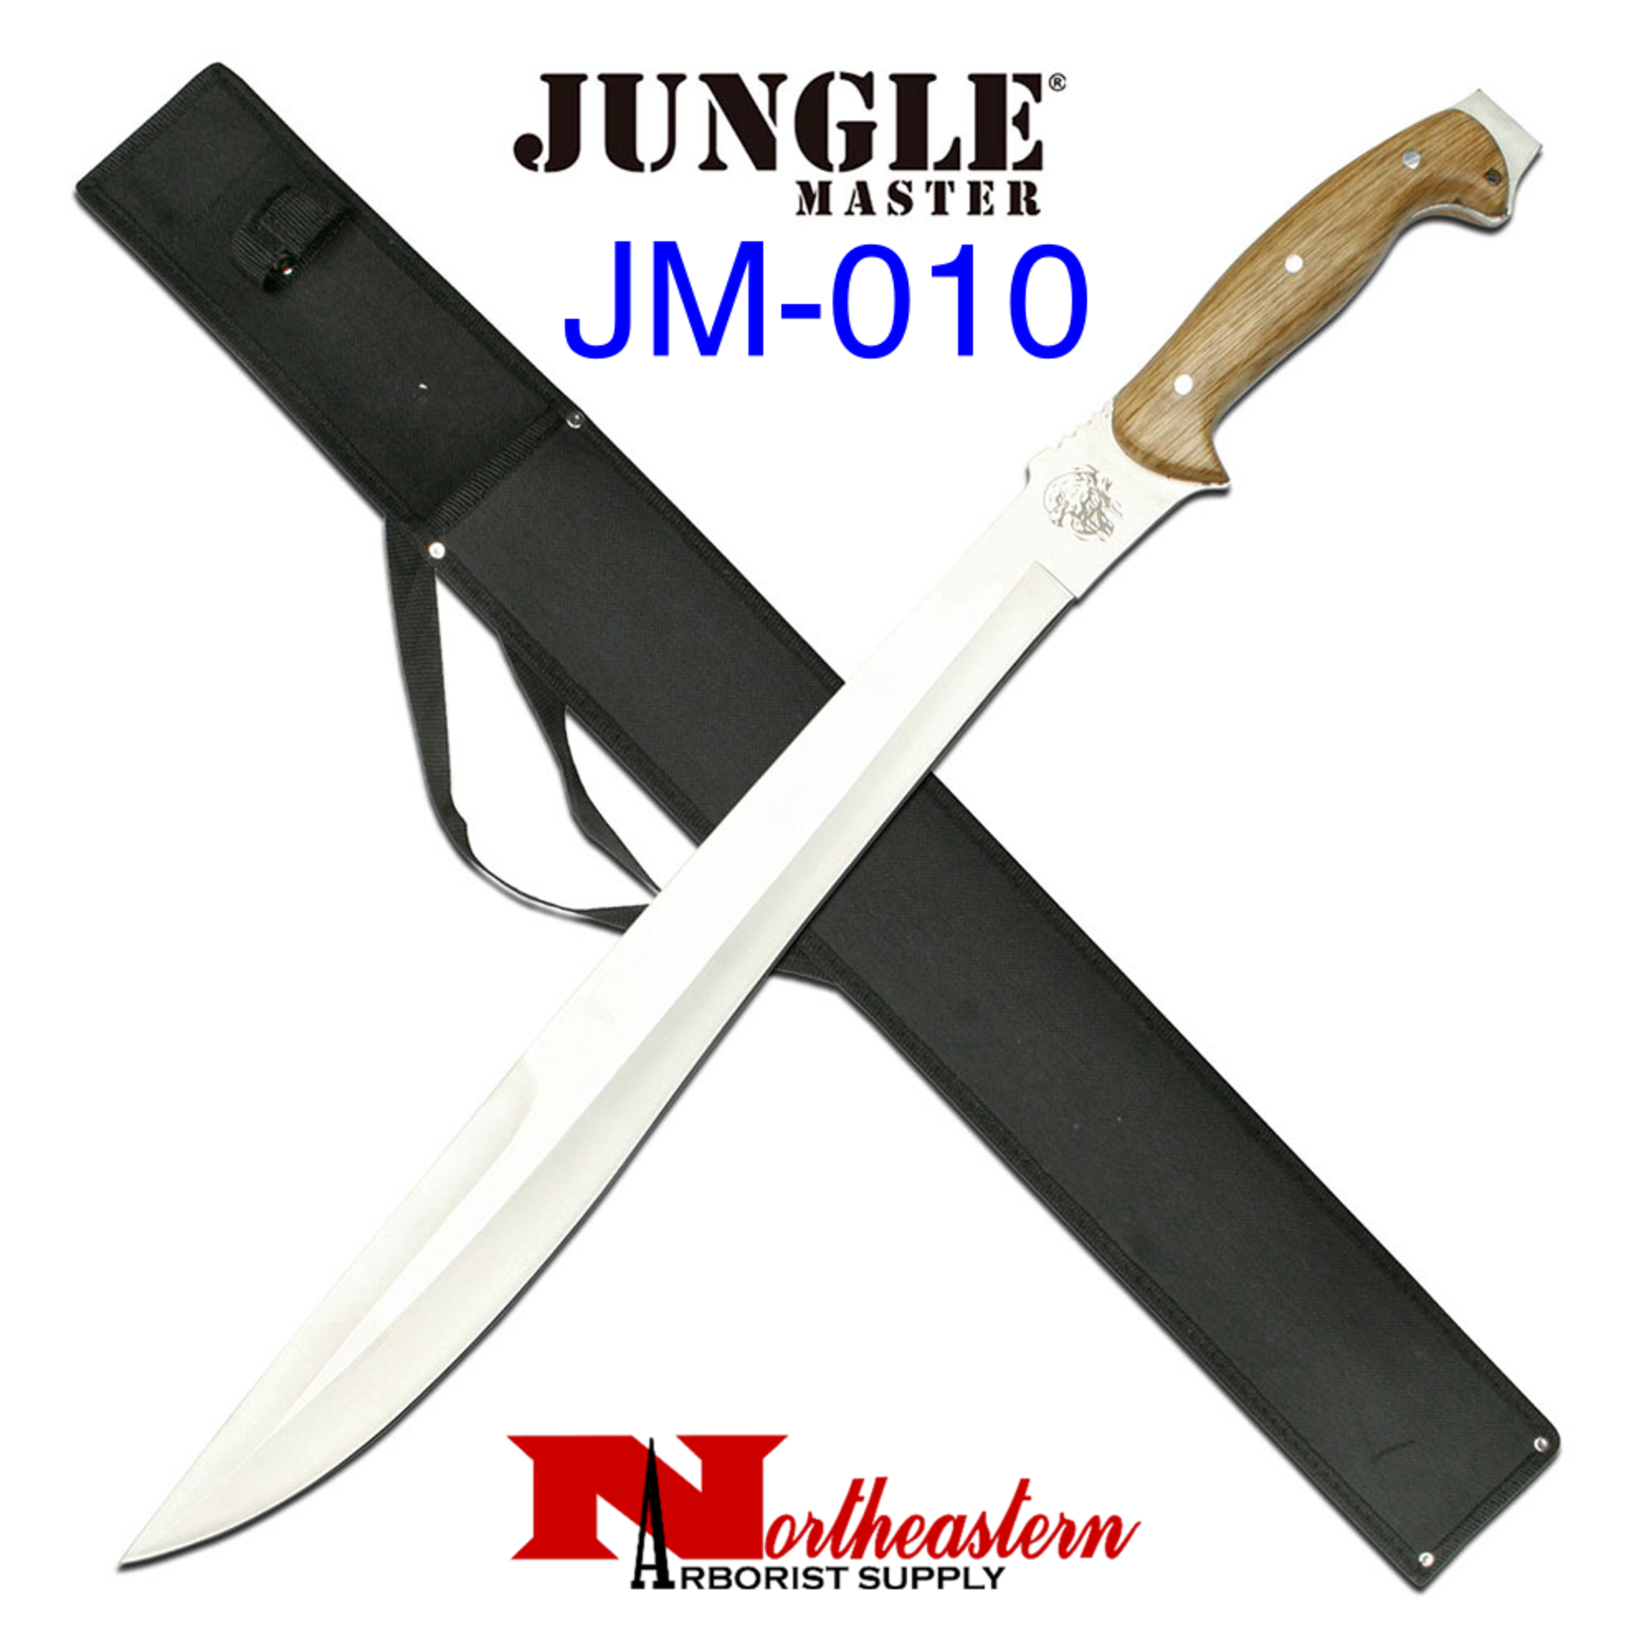 Jungle Master Jungle Master Machete, 25" Overall,17.5" Blade, Stainless Steel